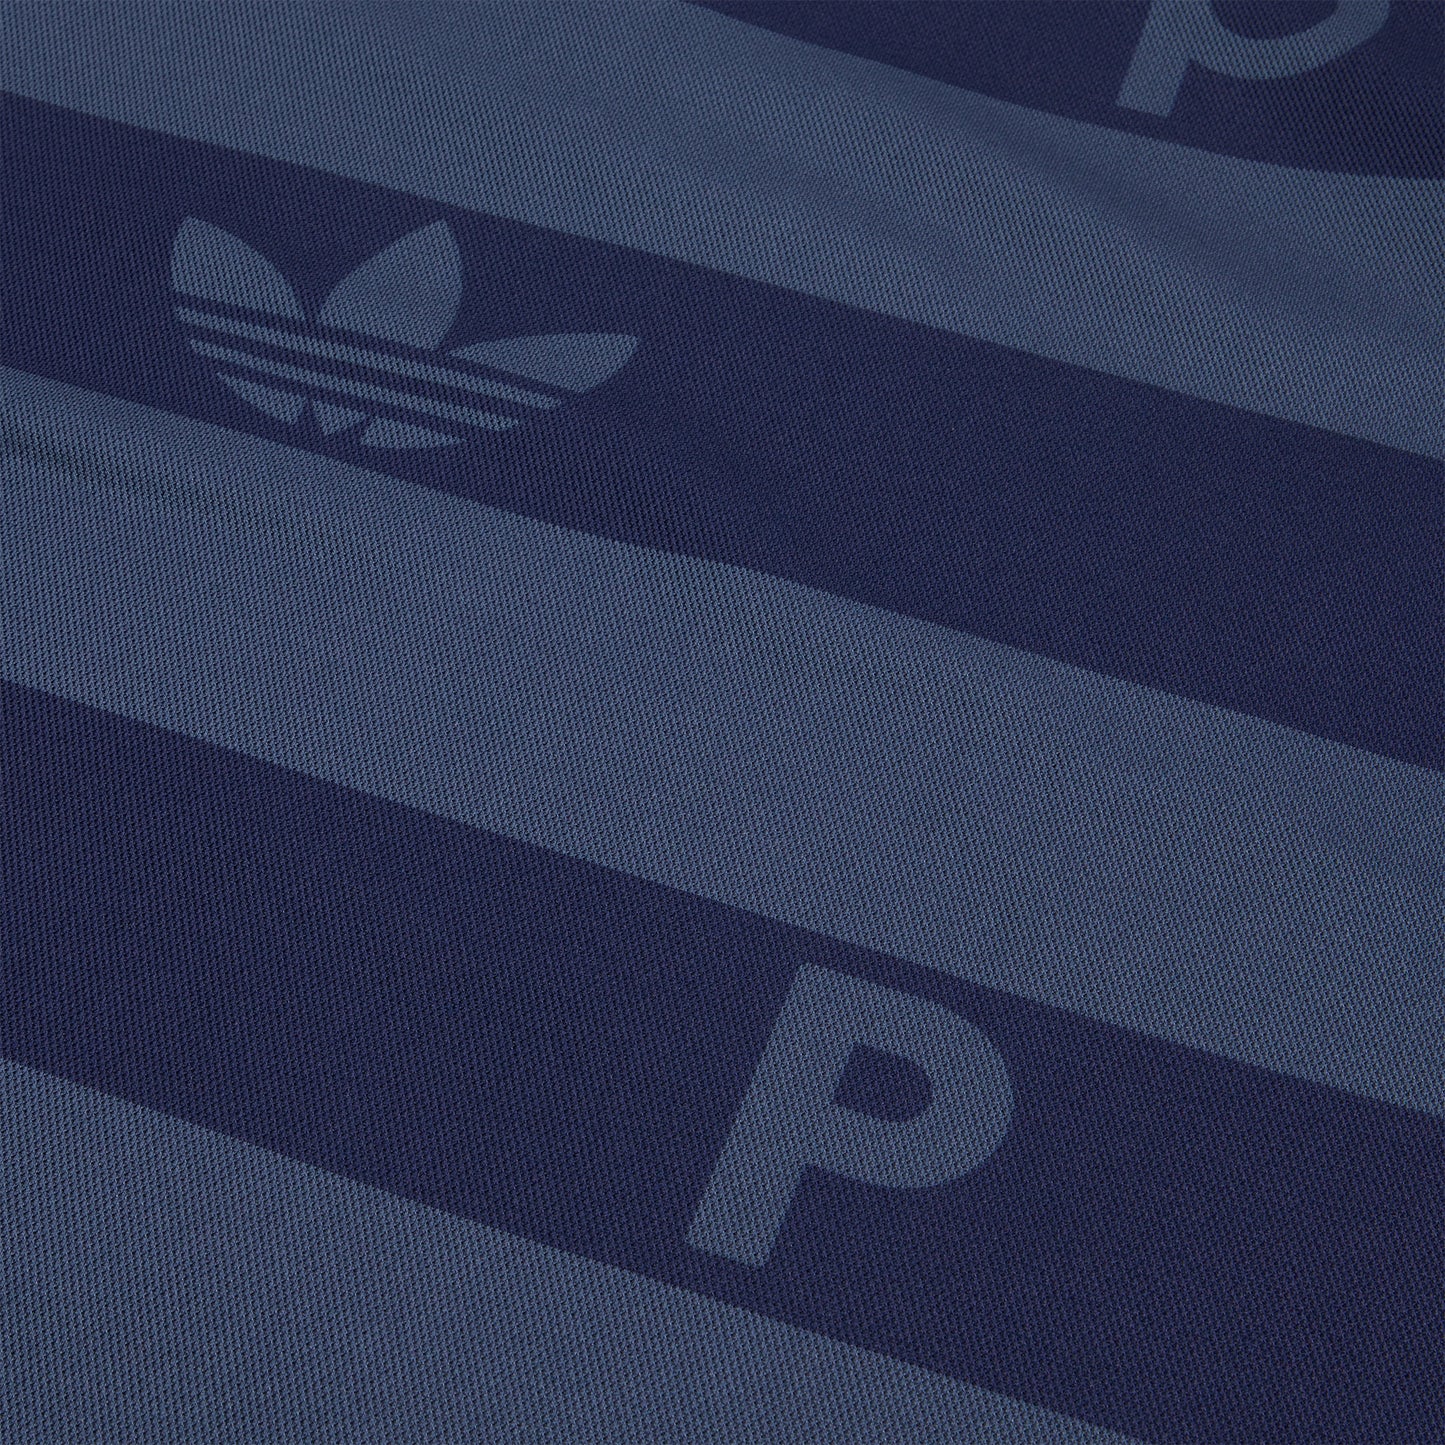 Adidas Pop Polo Shirt (Navy)